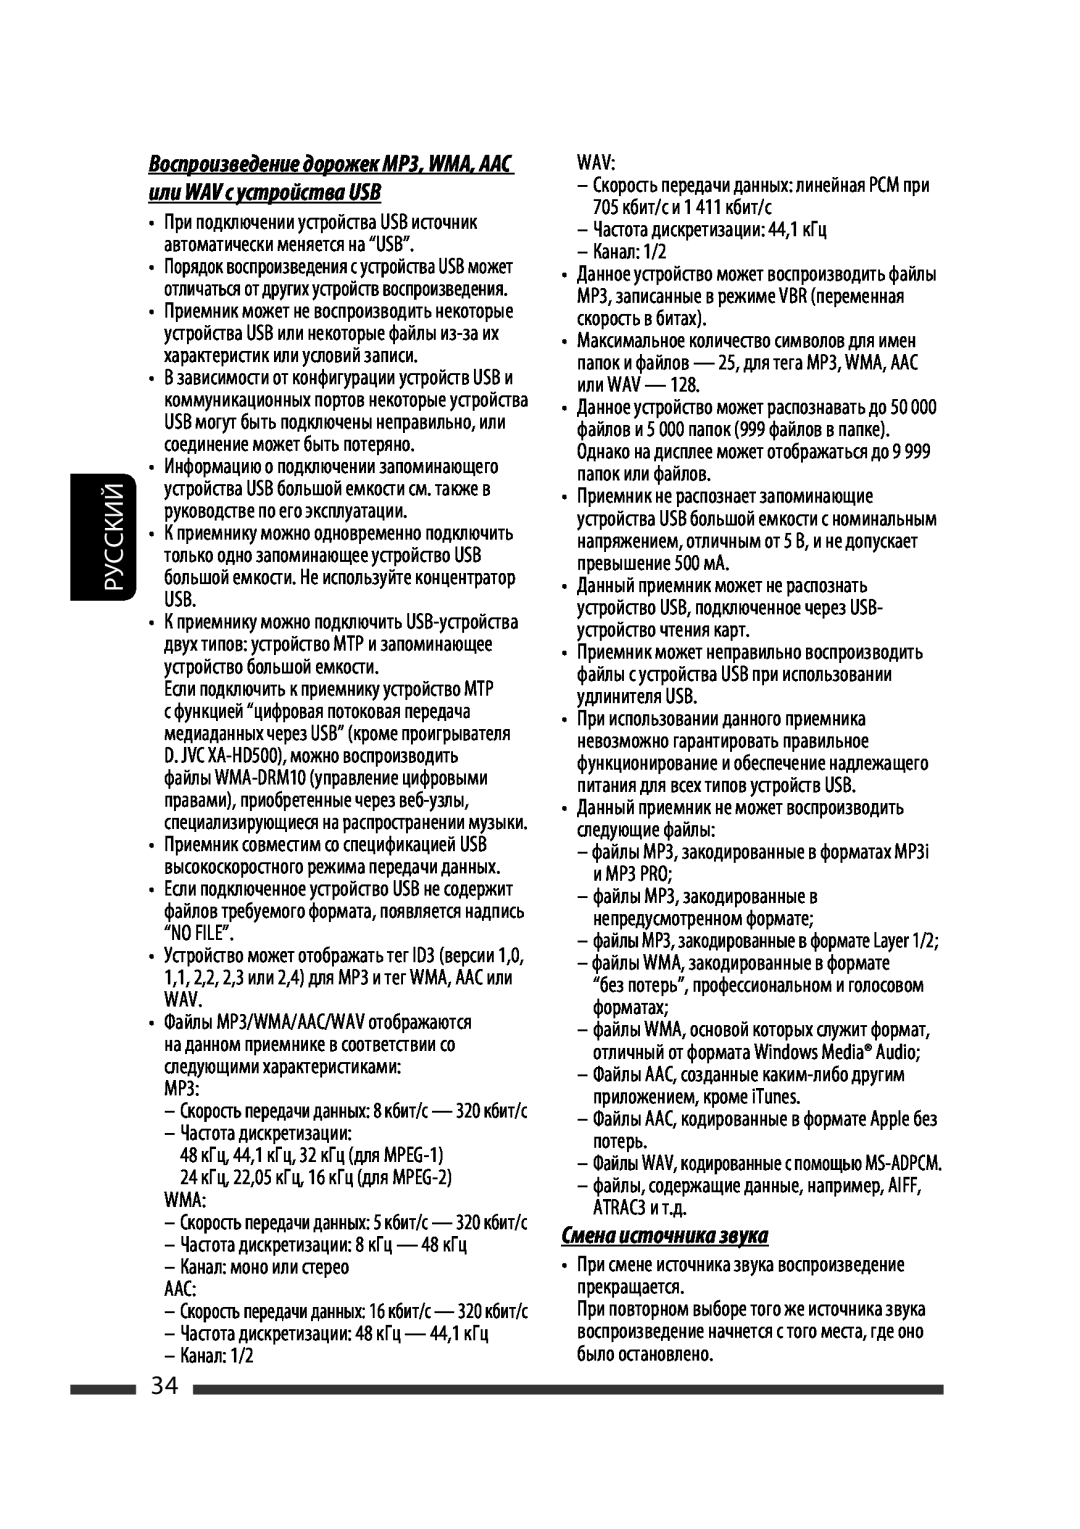 JVC KW-XG701 manual Смена источника звука, Руcckий 